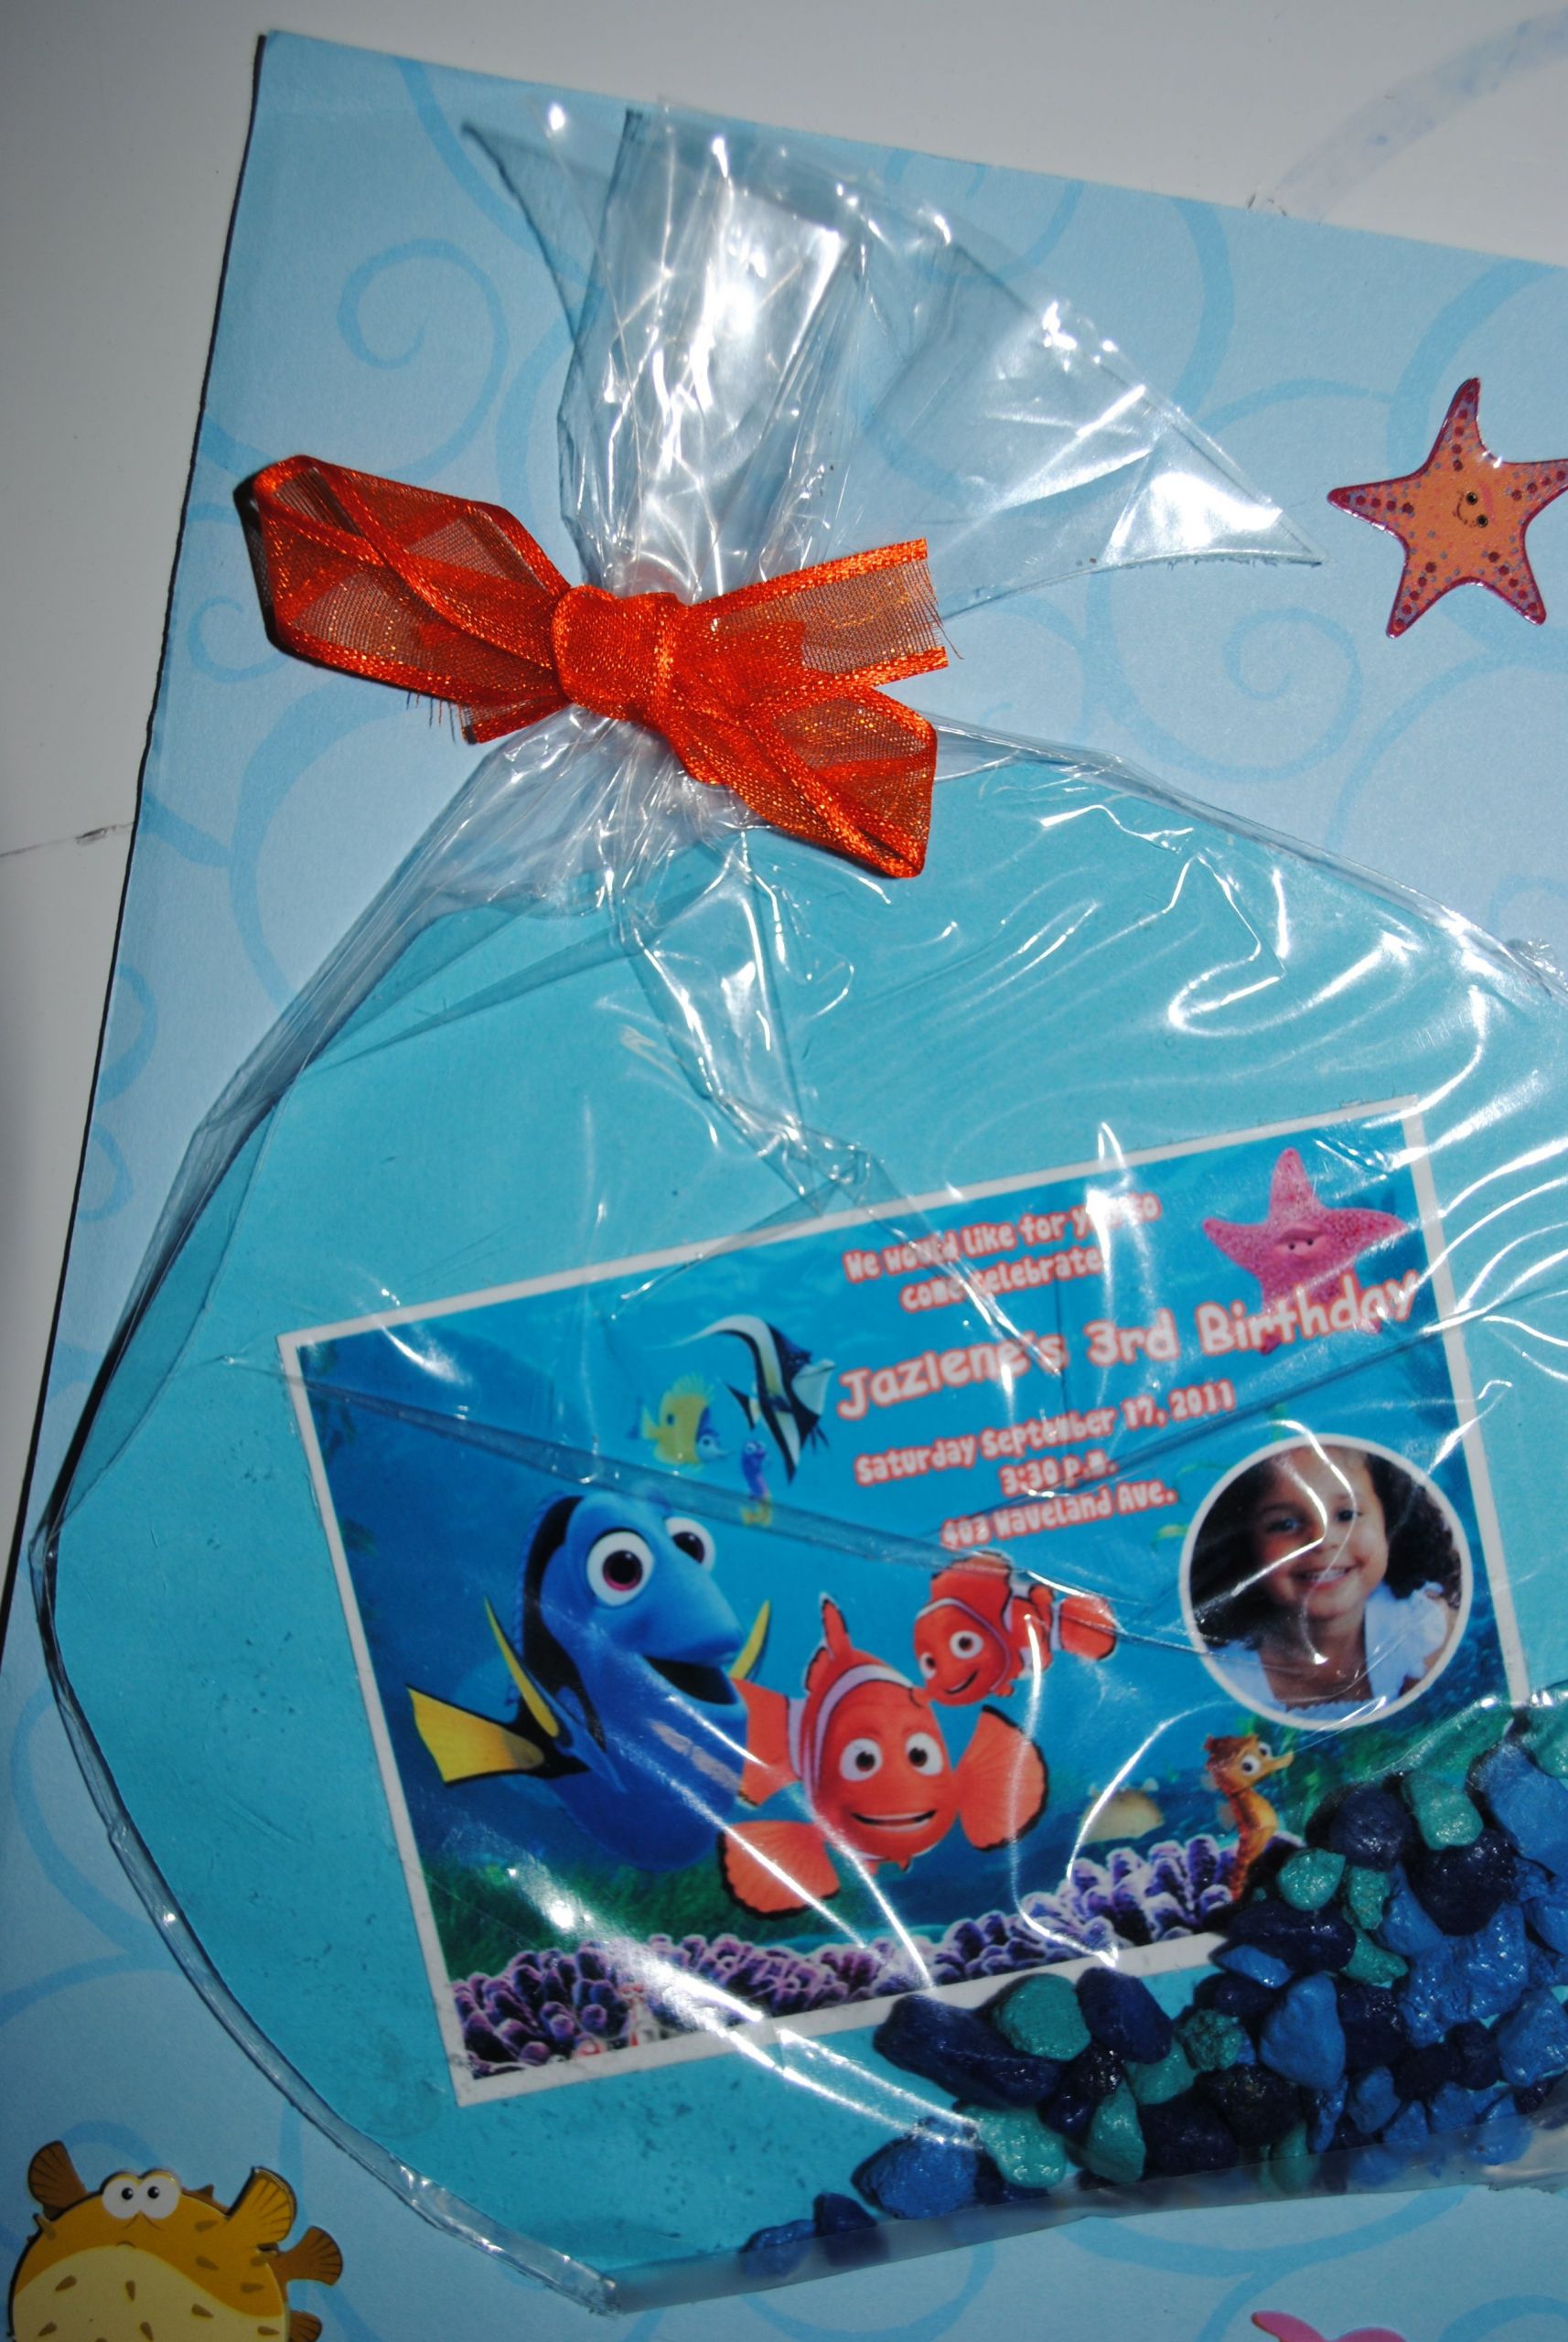 Finding Nemo Birthday Invitations
 FINDING NEMO INVITATION FINDING NEMO PARTY